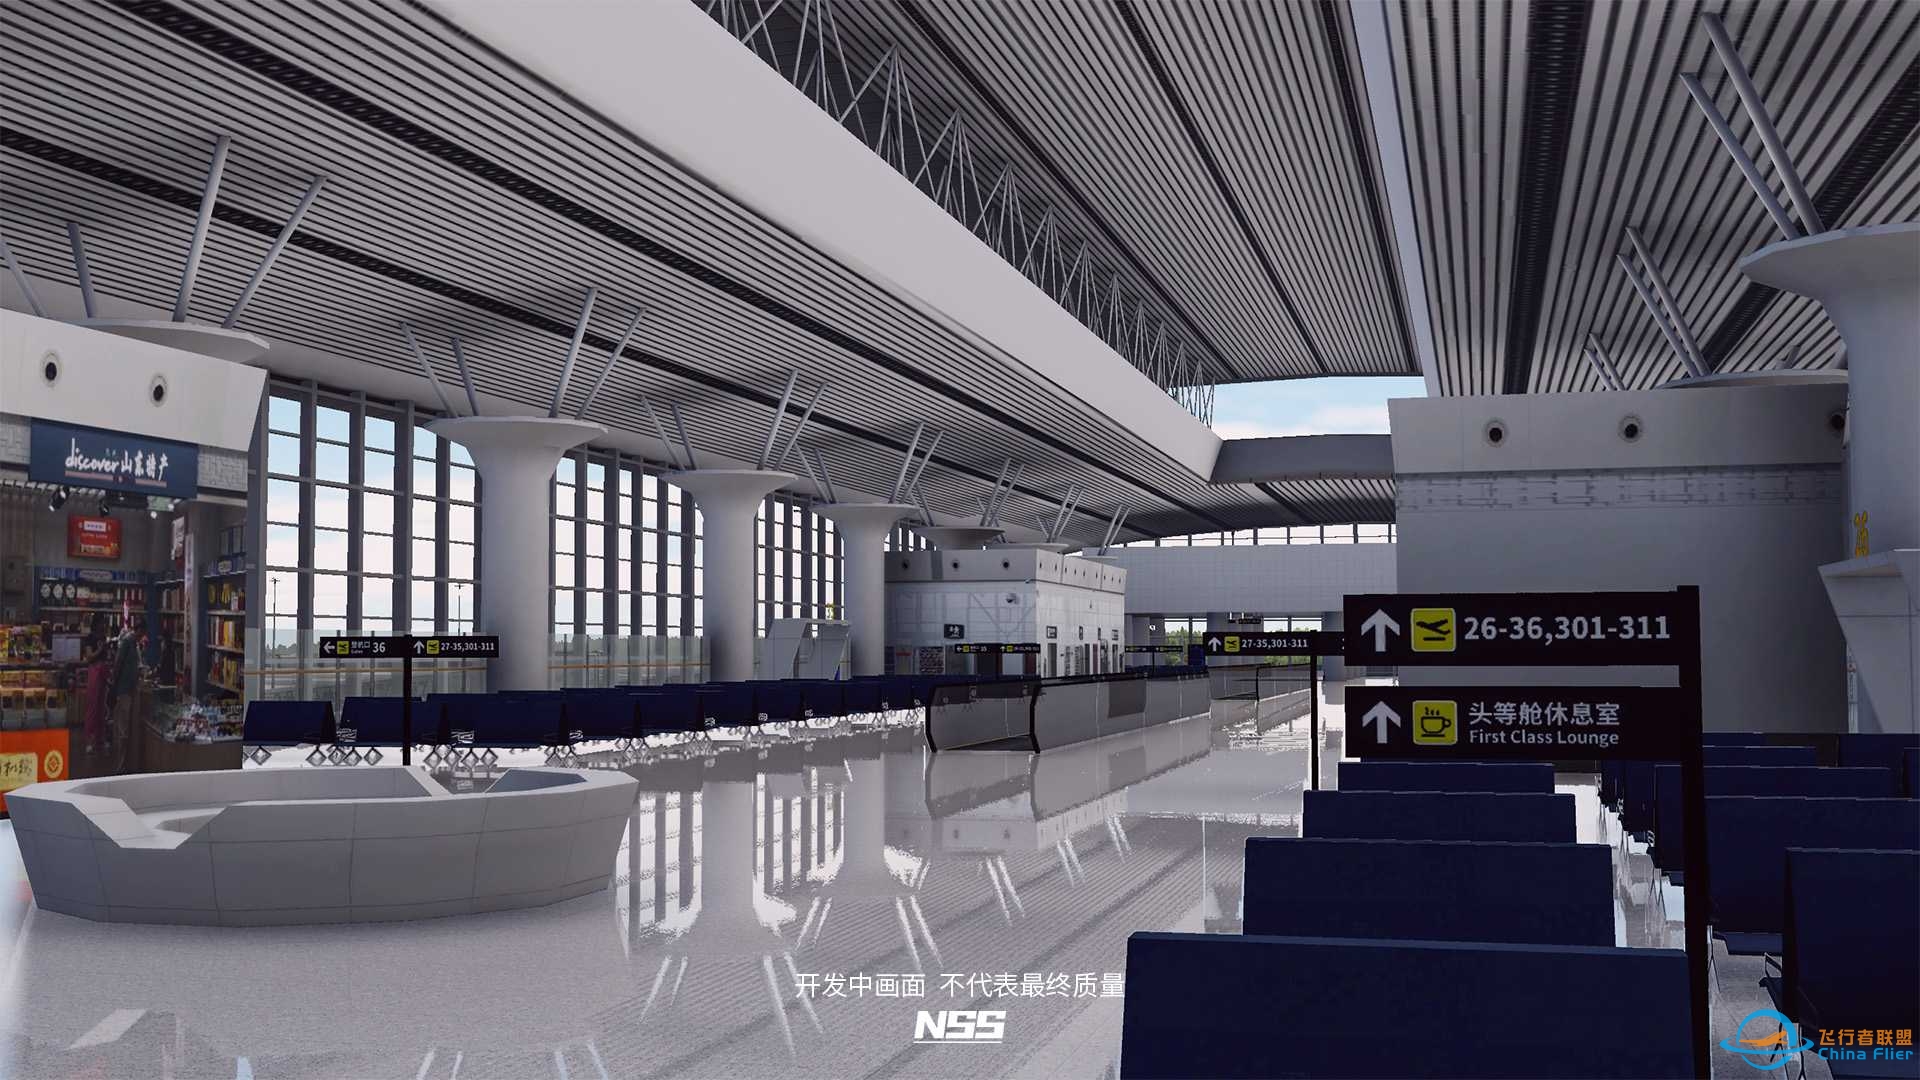 NSS地景开发组 | ZSJN | 济南遥墙国际机场项目最新进展-3173 